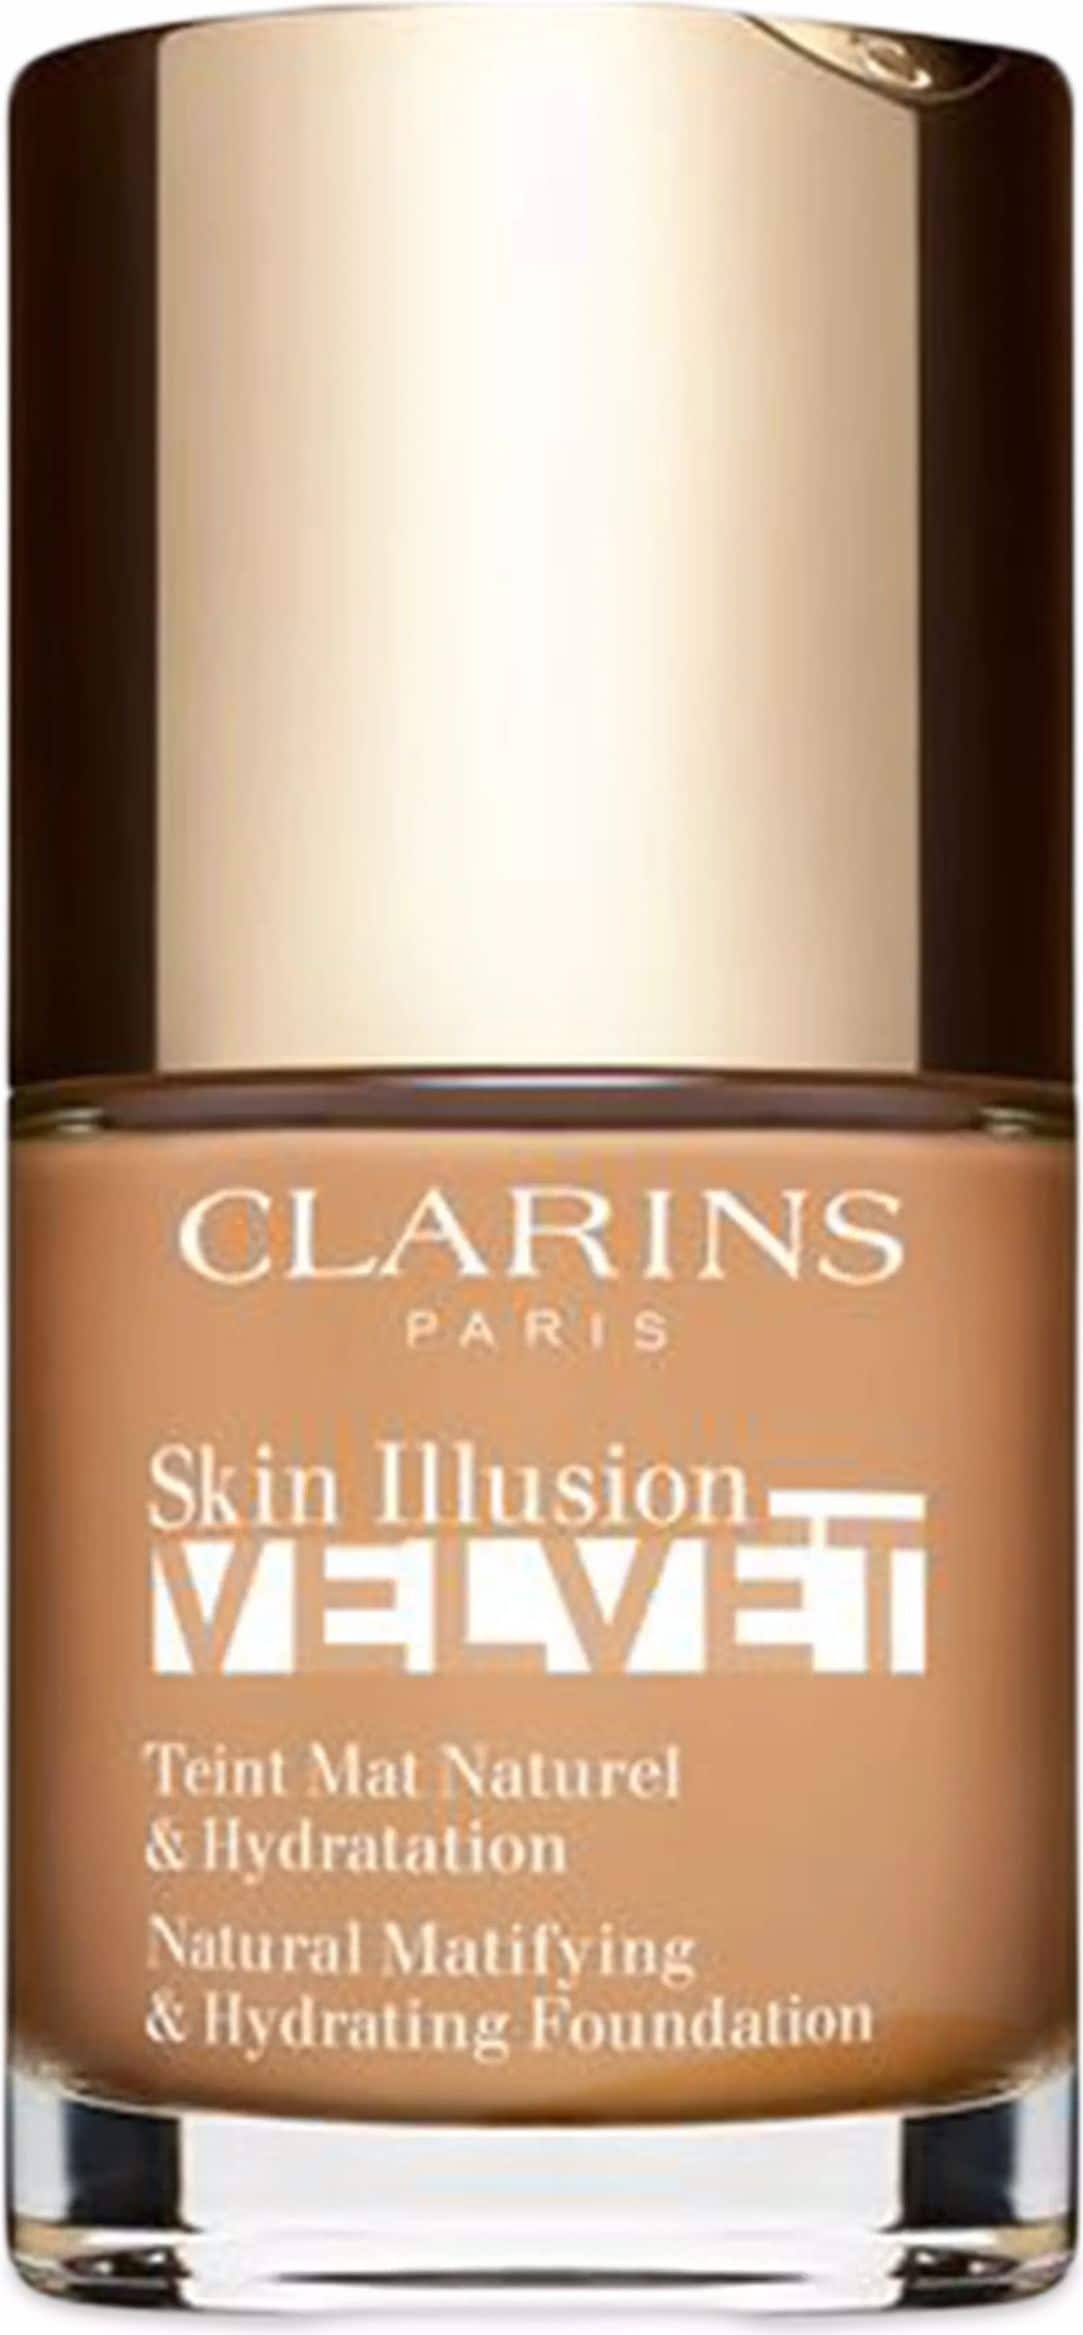 Clarins Skin Illusion Velvet Foundation - #111N 30ml/1oz